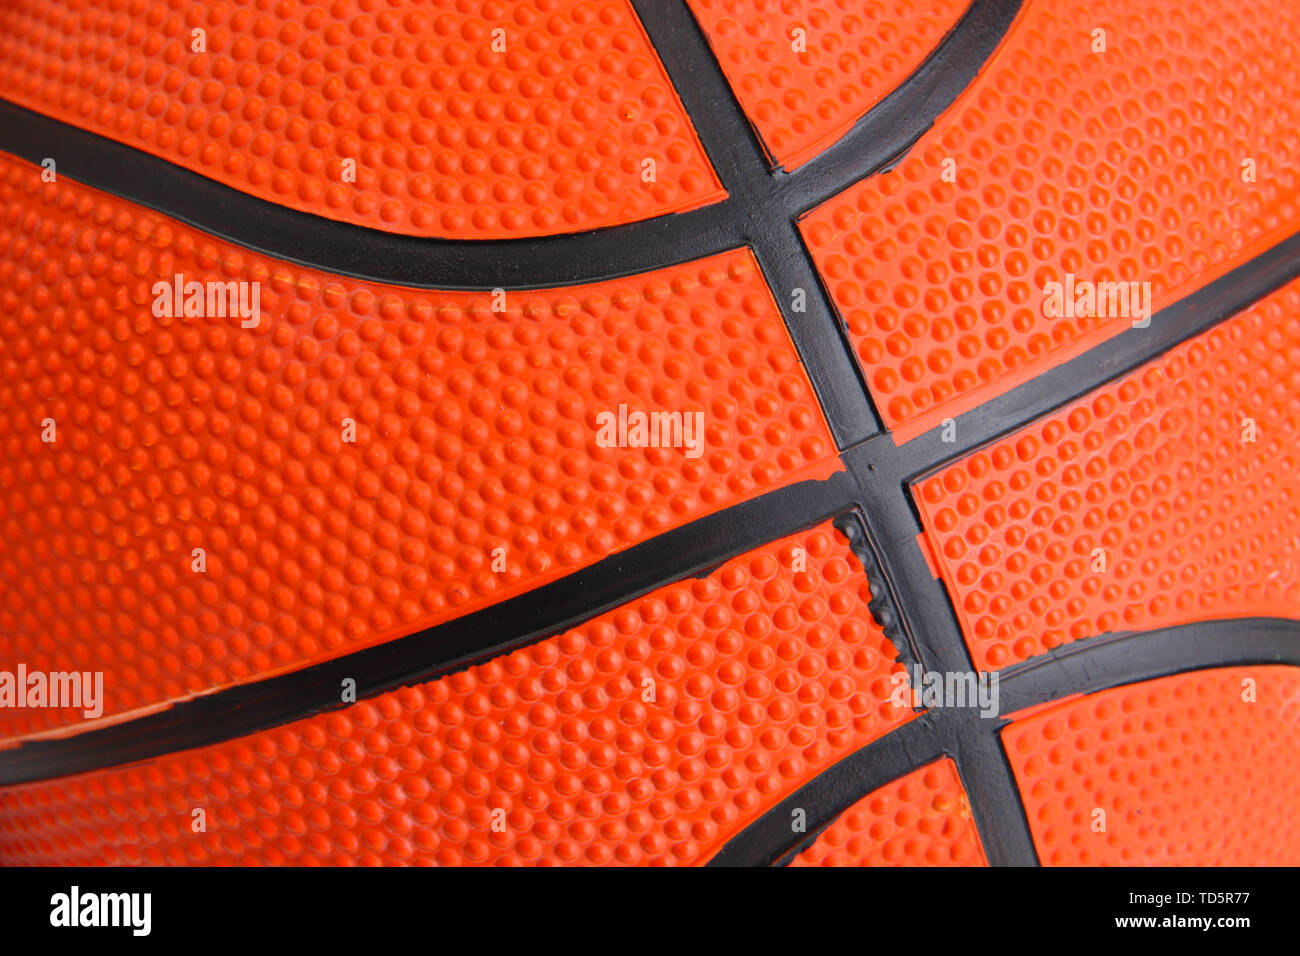 Basketball, close up Stock Photo